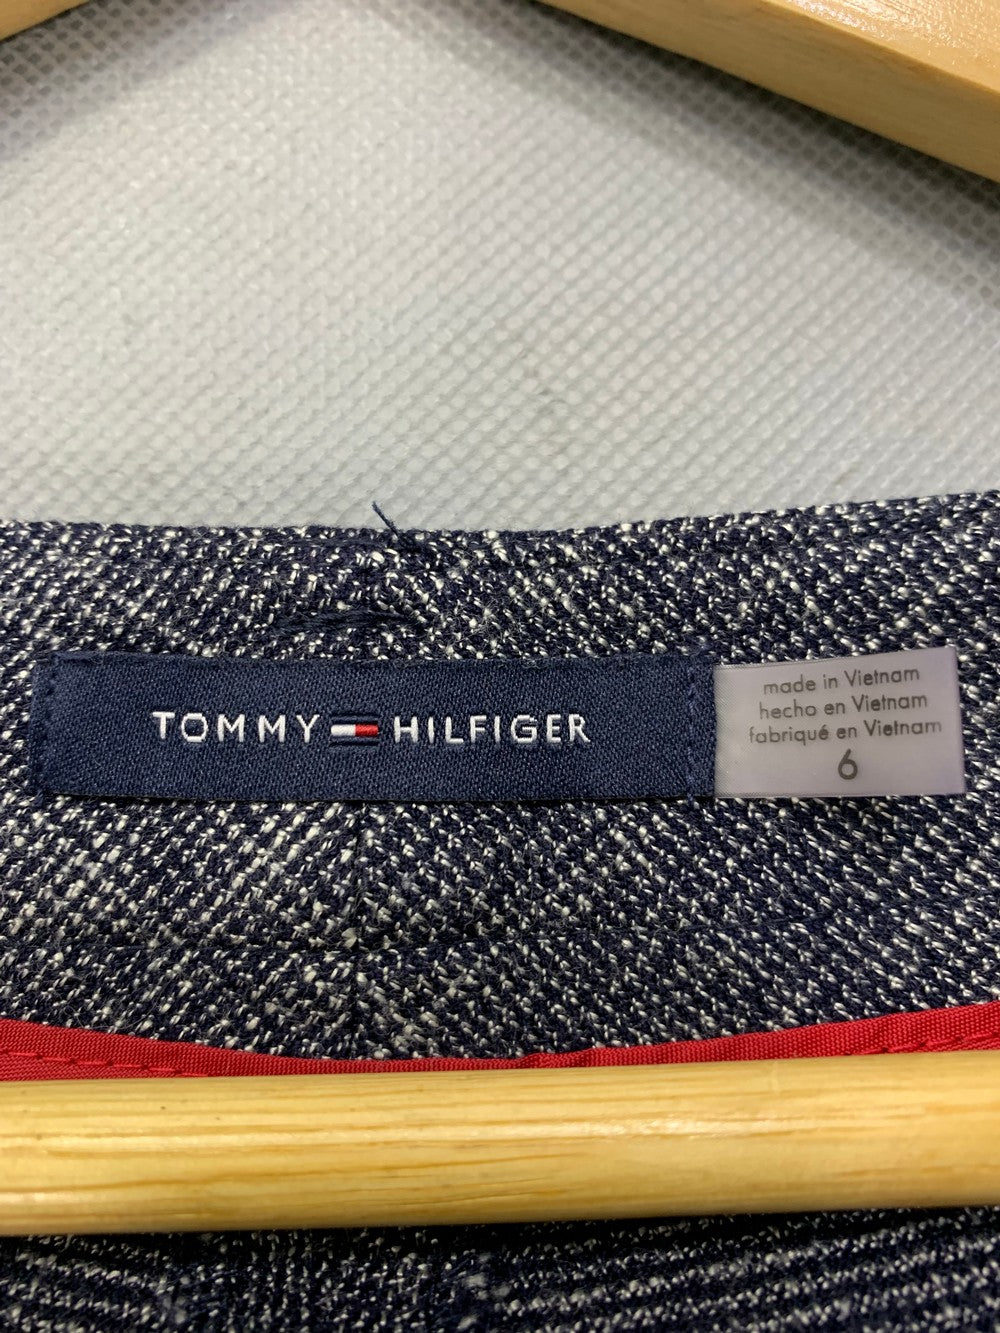 Tommy Hilfiger Branded Original Cotton For Women Pant